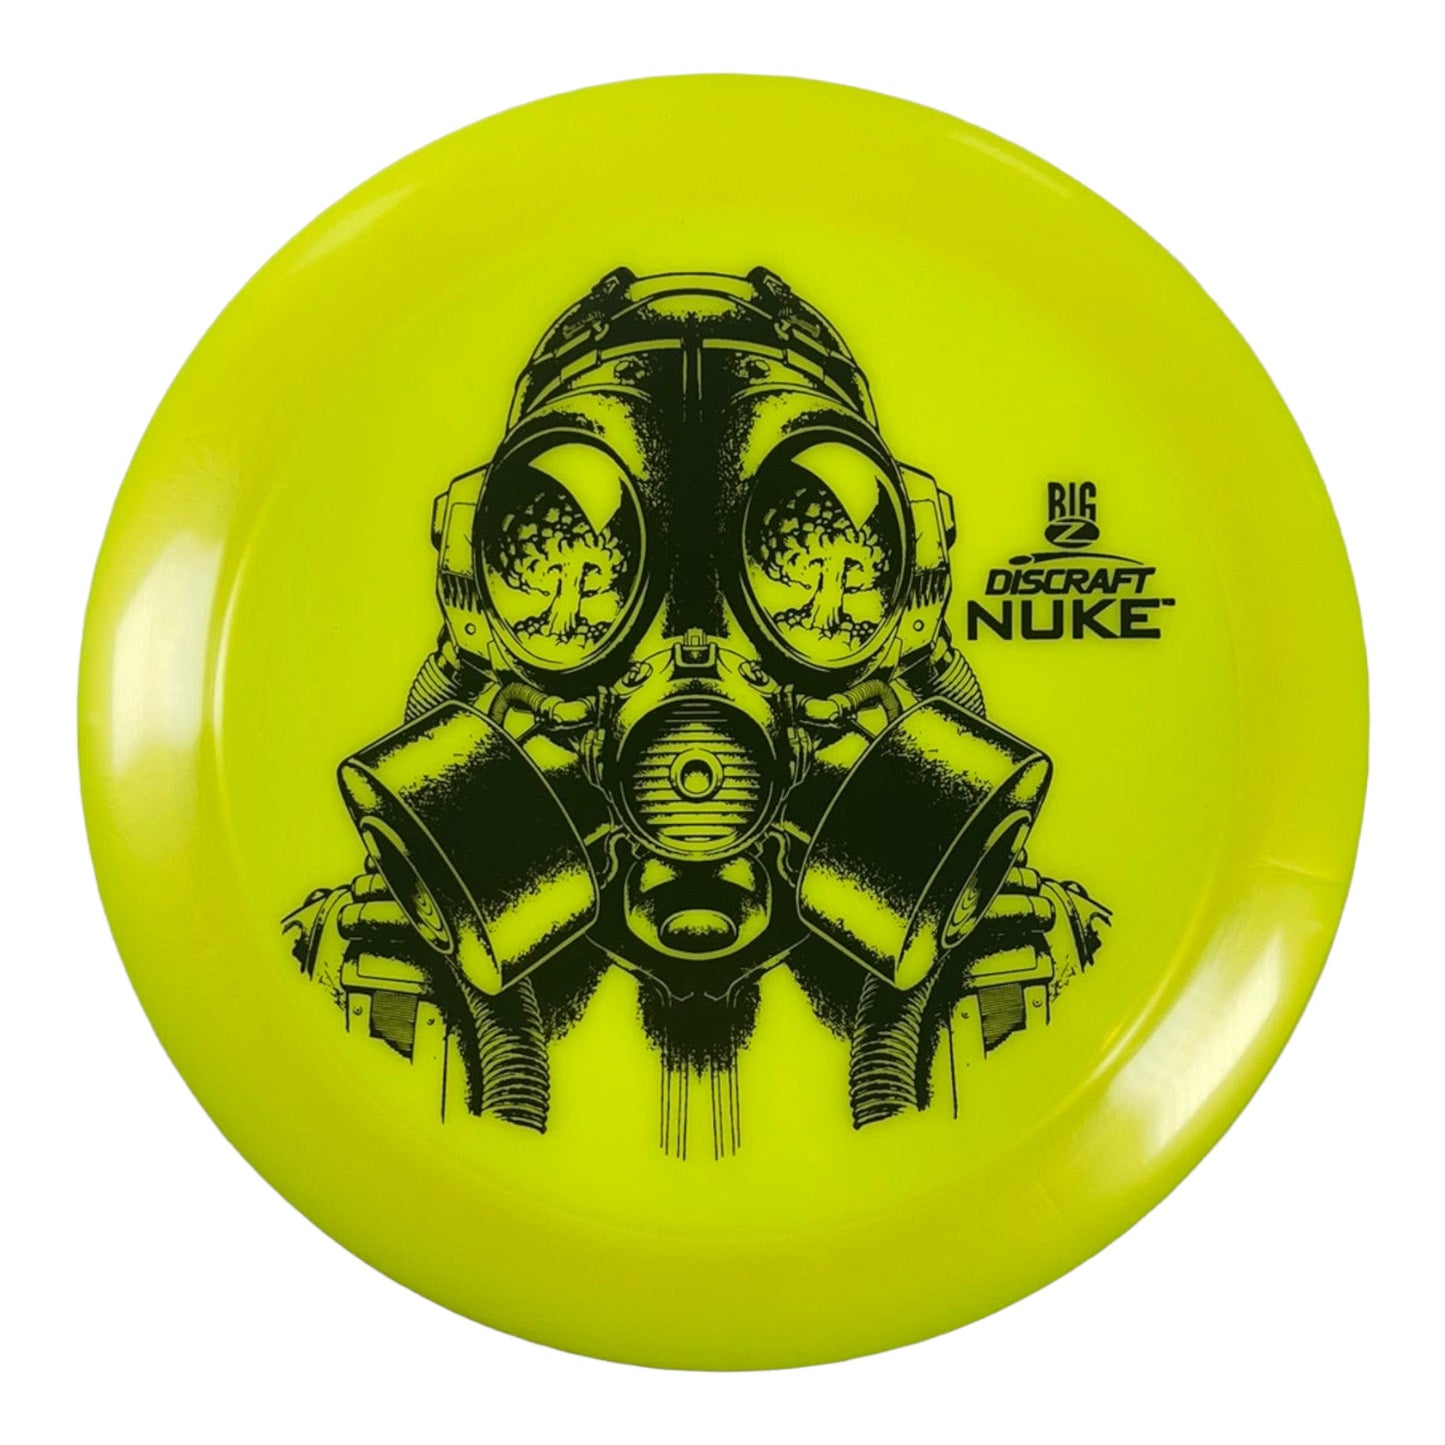 Discraft Nuke | Big Z | Yellow/Black 174g Disc Golf